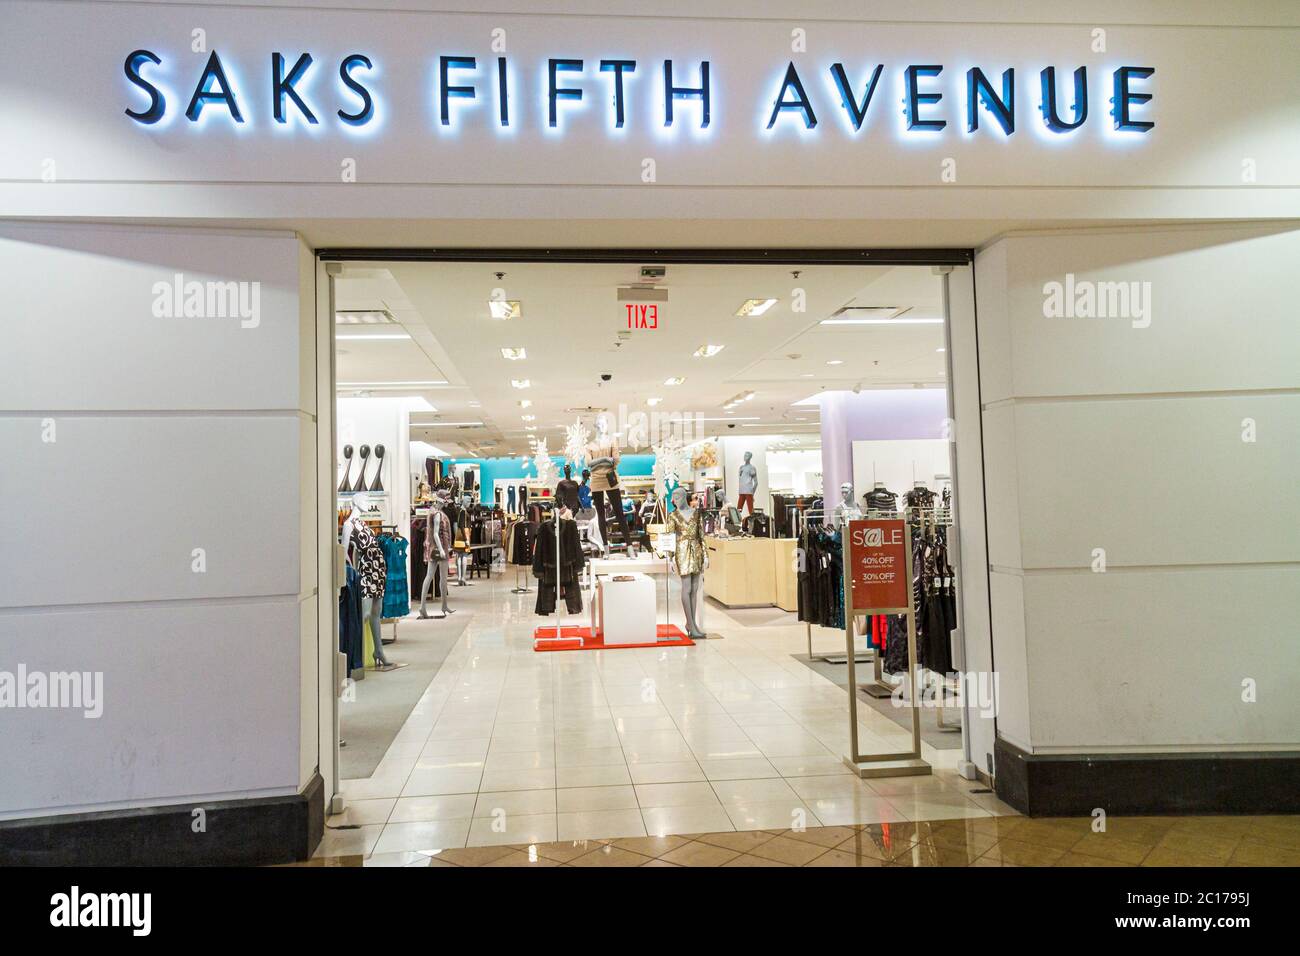 Saks Fifth Avenue permanently closing Cincinnati store